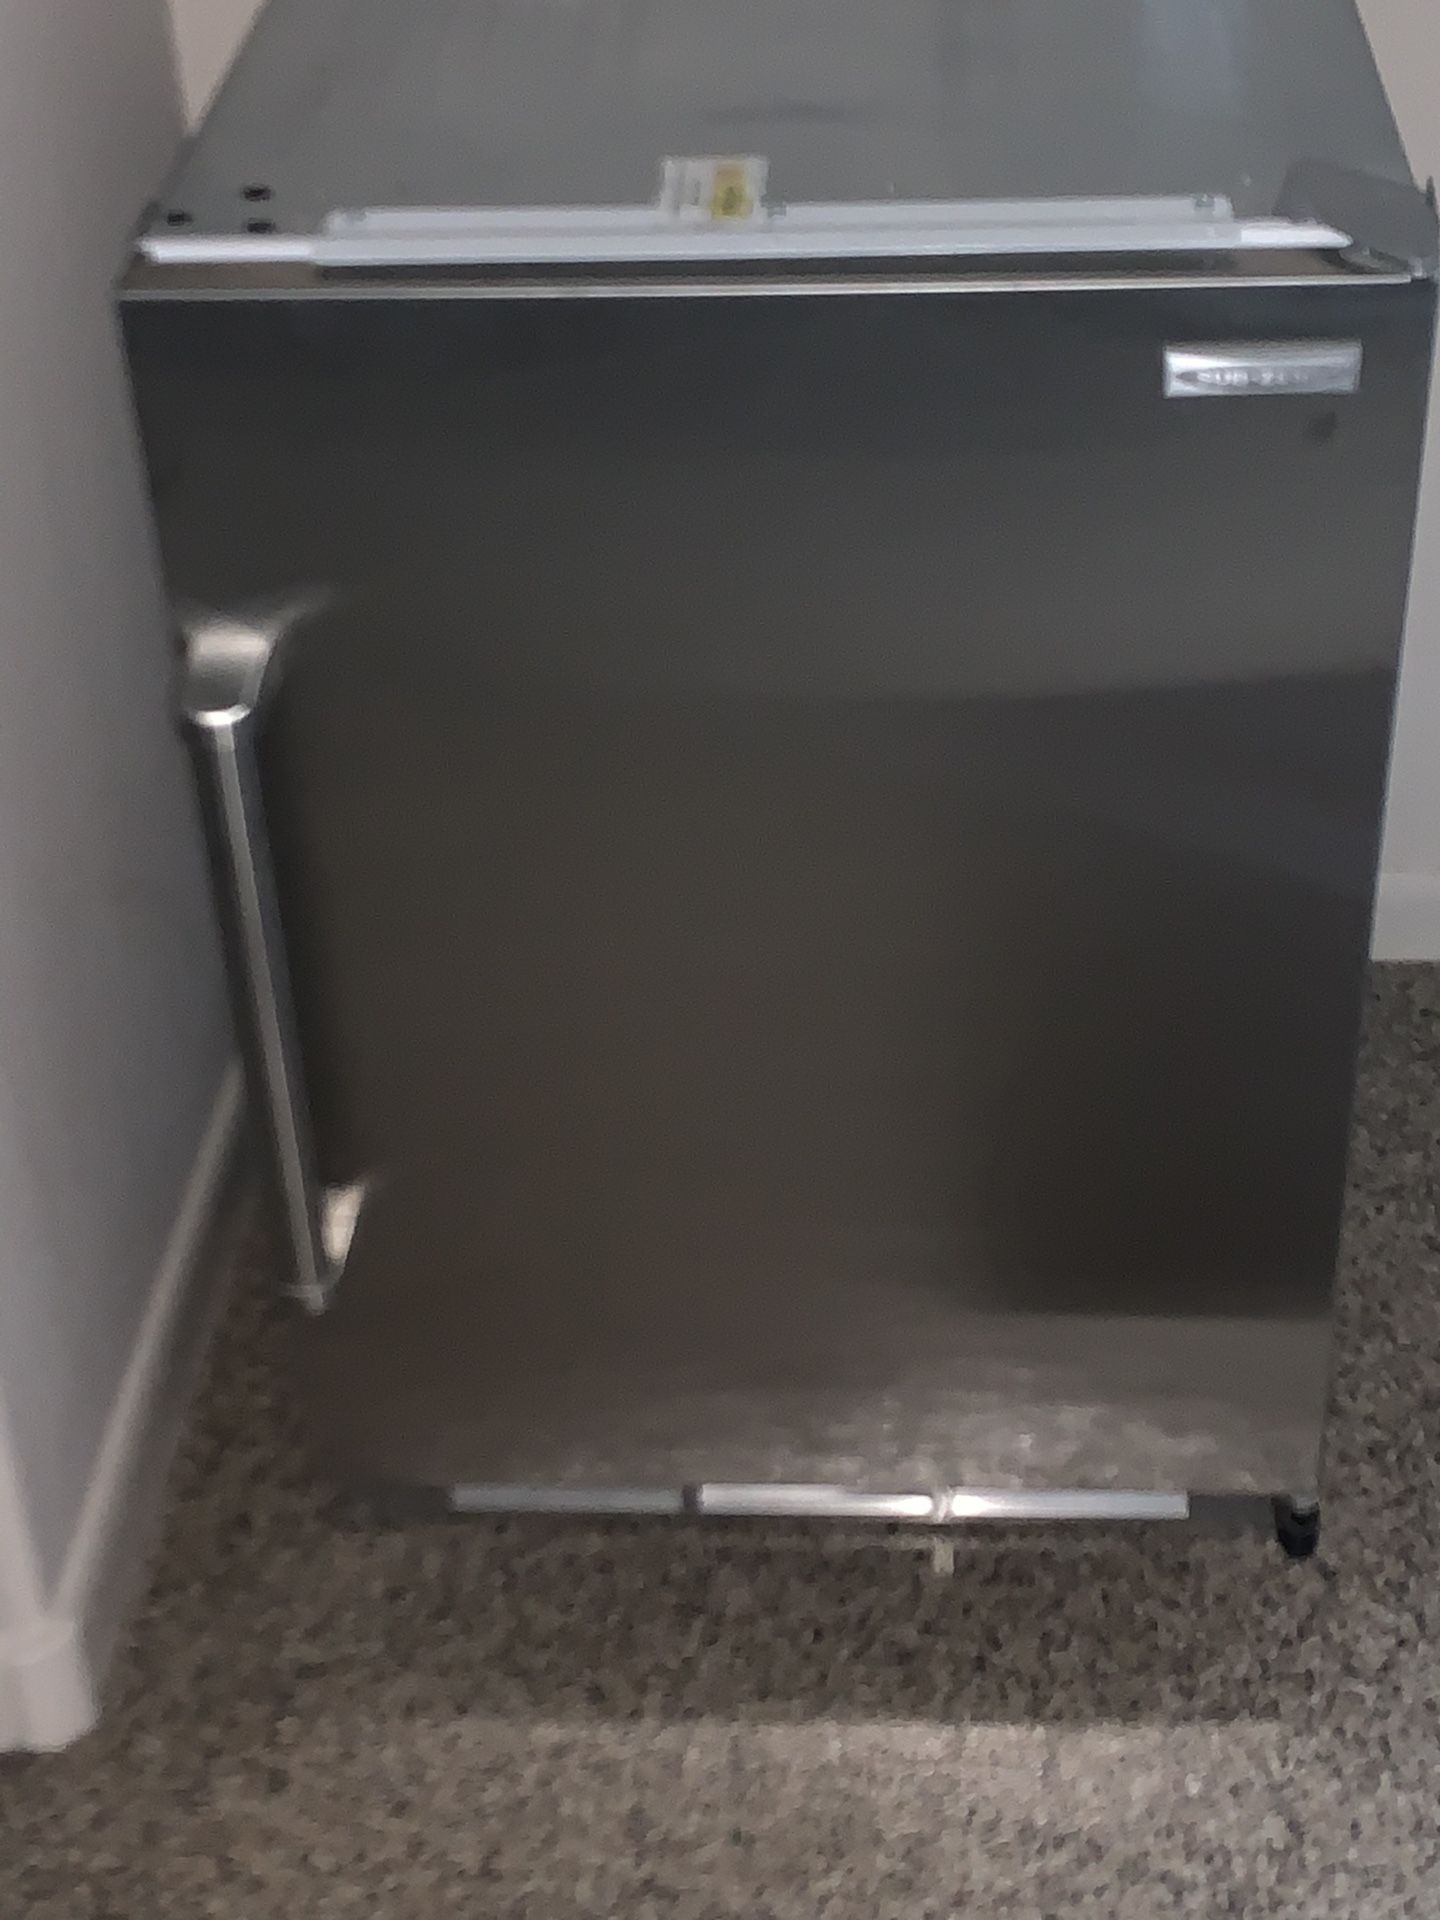 Subzero refrigerator -like new